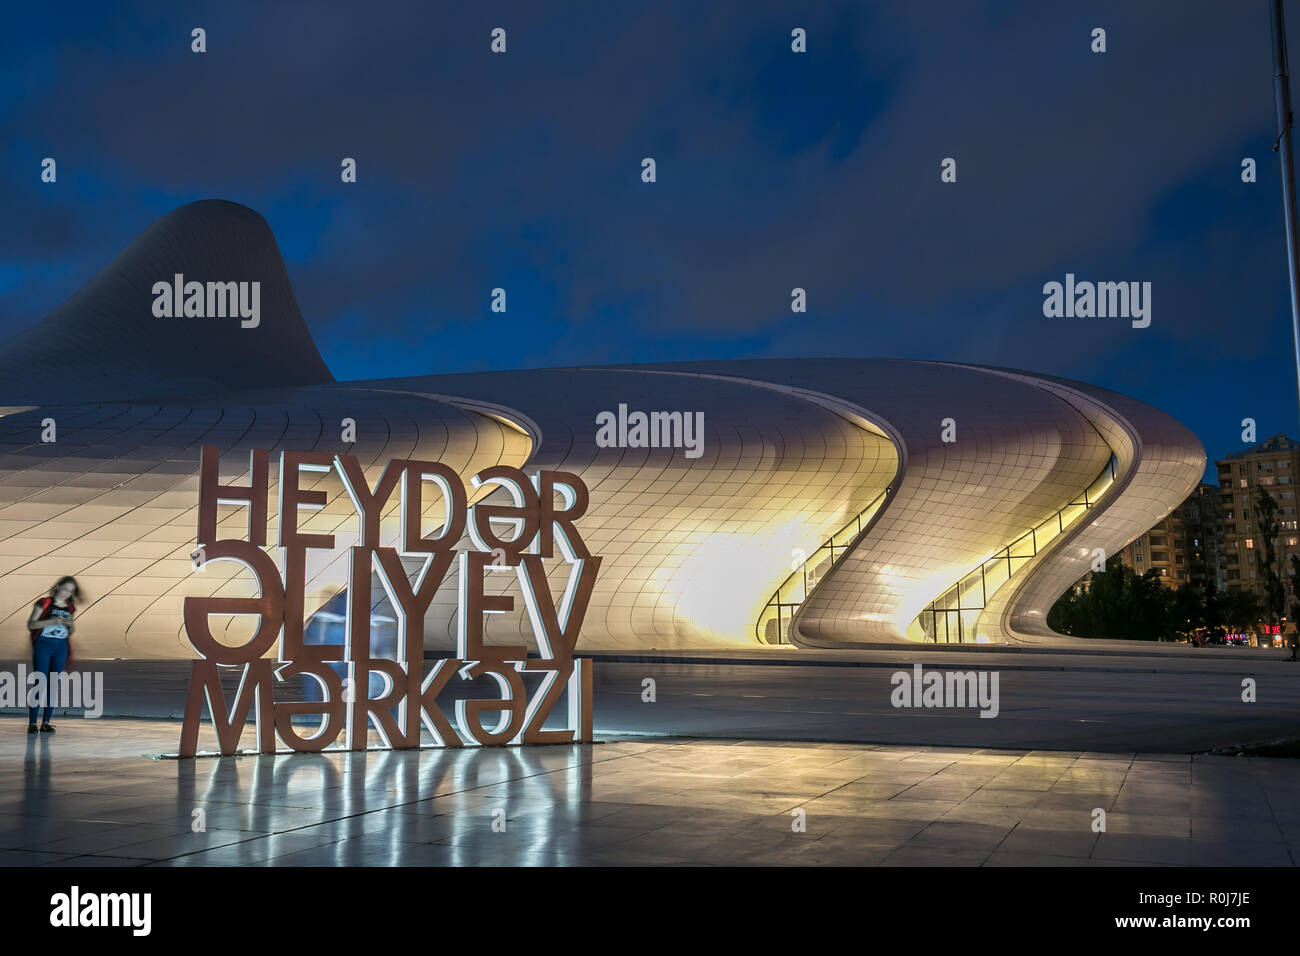 Exterior view of The Heydar Aliyev Center in Baku,Azerbaijan Stock Photo